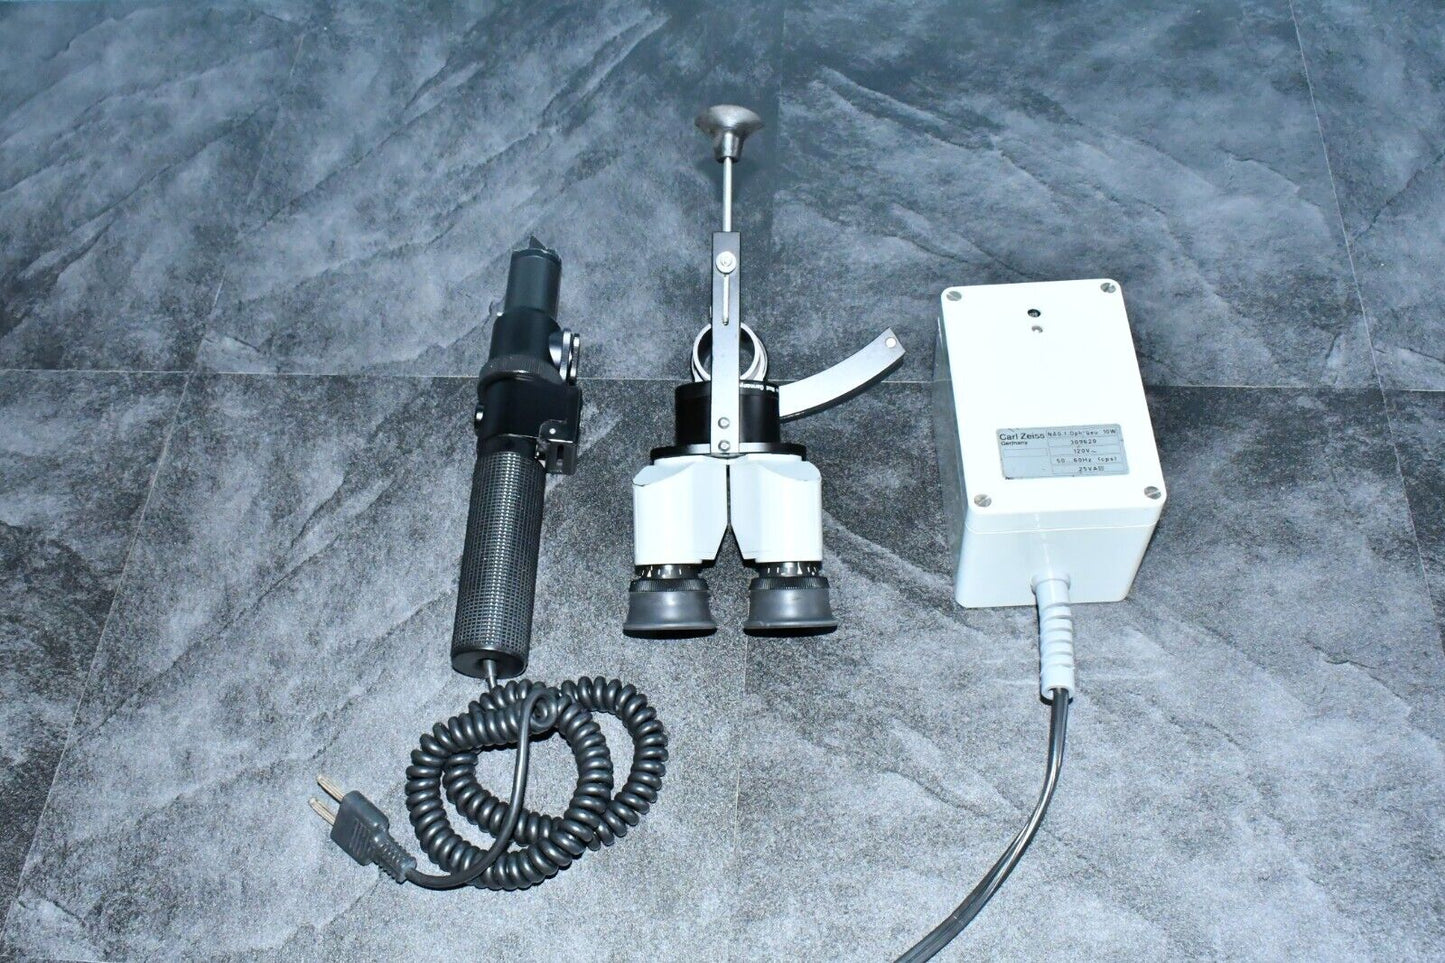 Zeiss HSO-10 portable slit-lamp